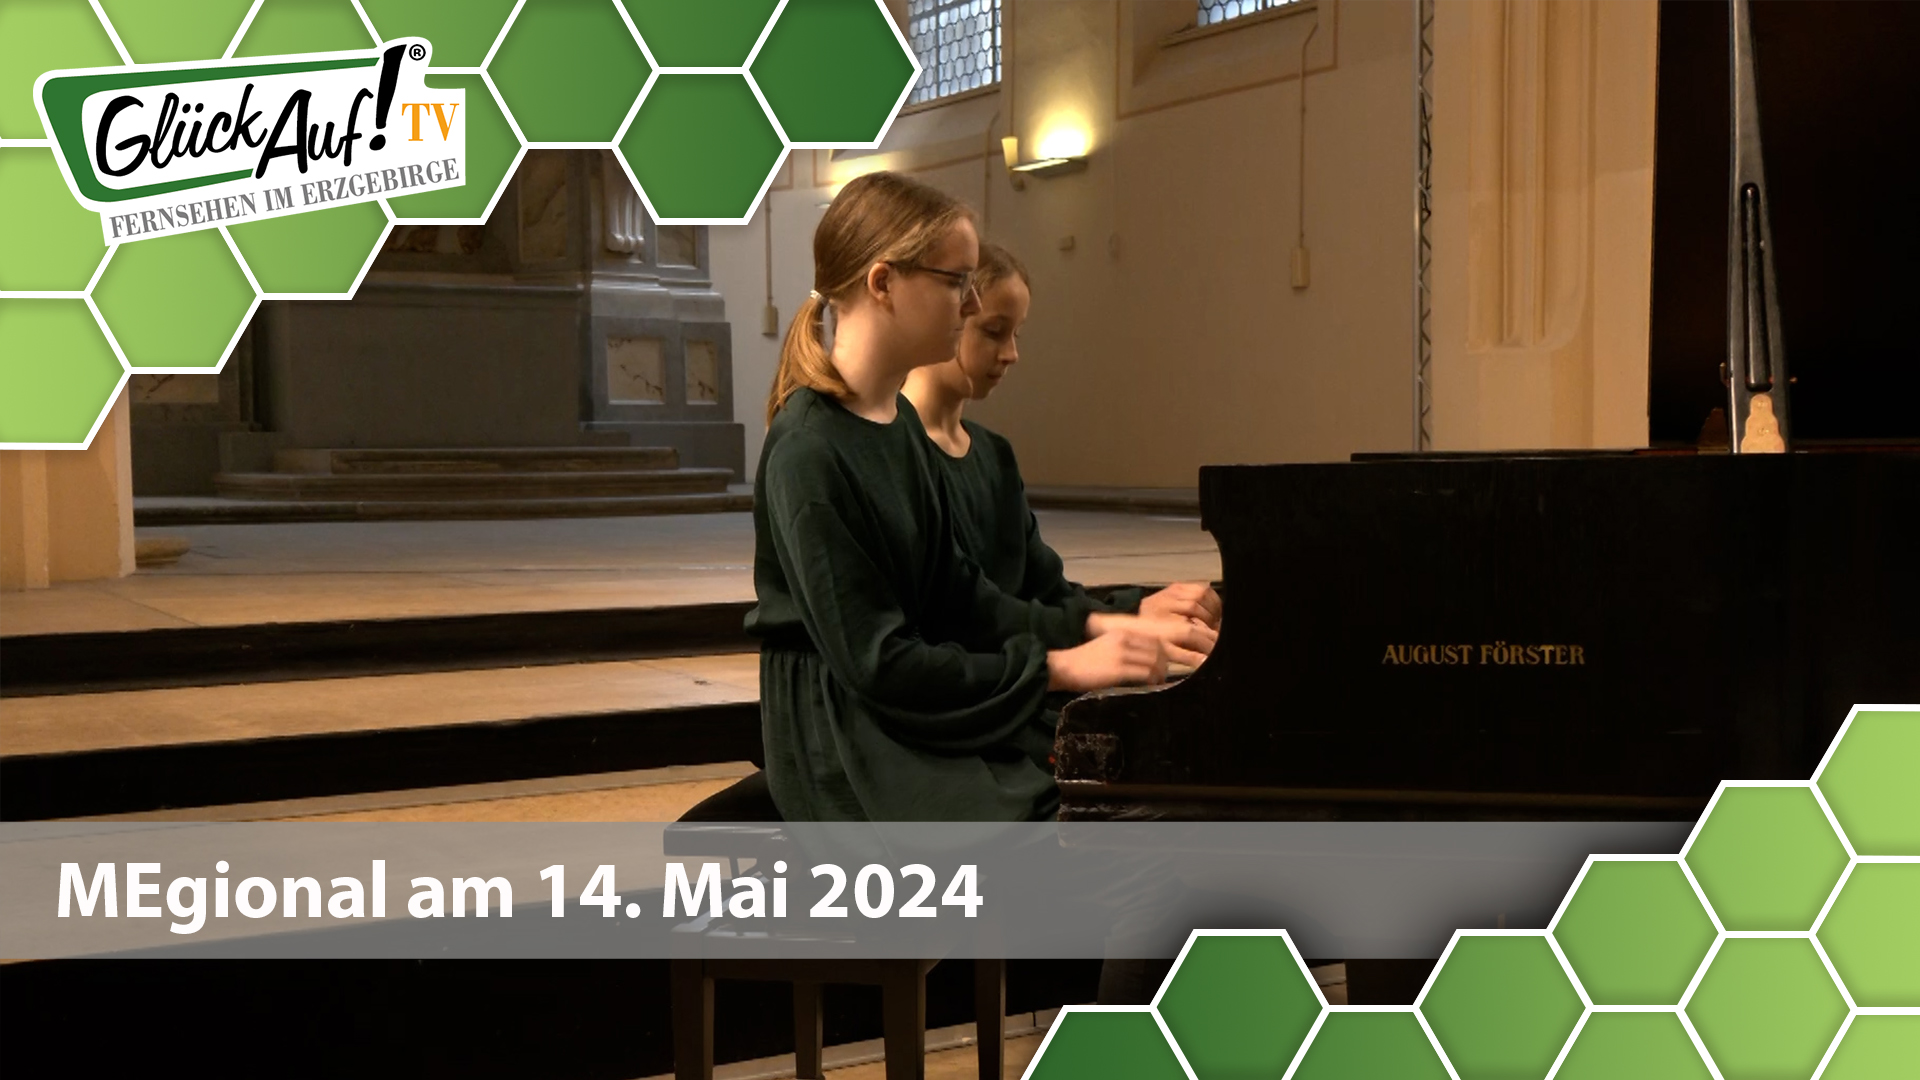 MEgional am 14. Mai 2024 mit dem Thema "Jugend musiziert" in Freiberg